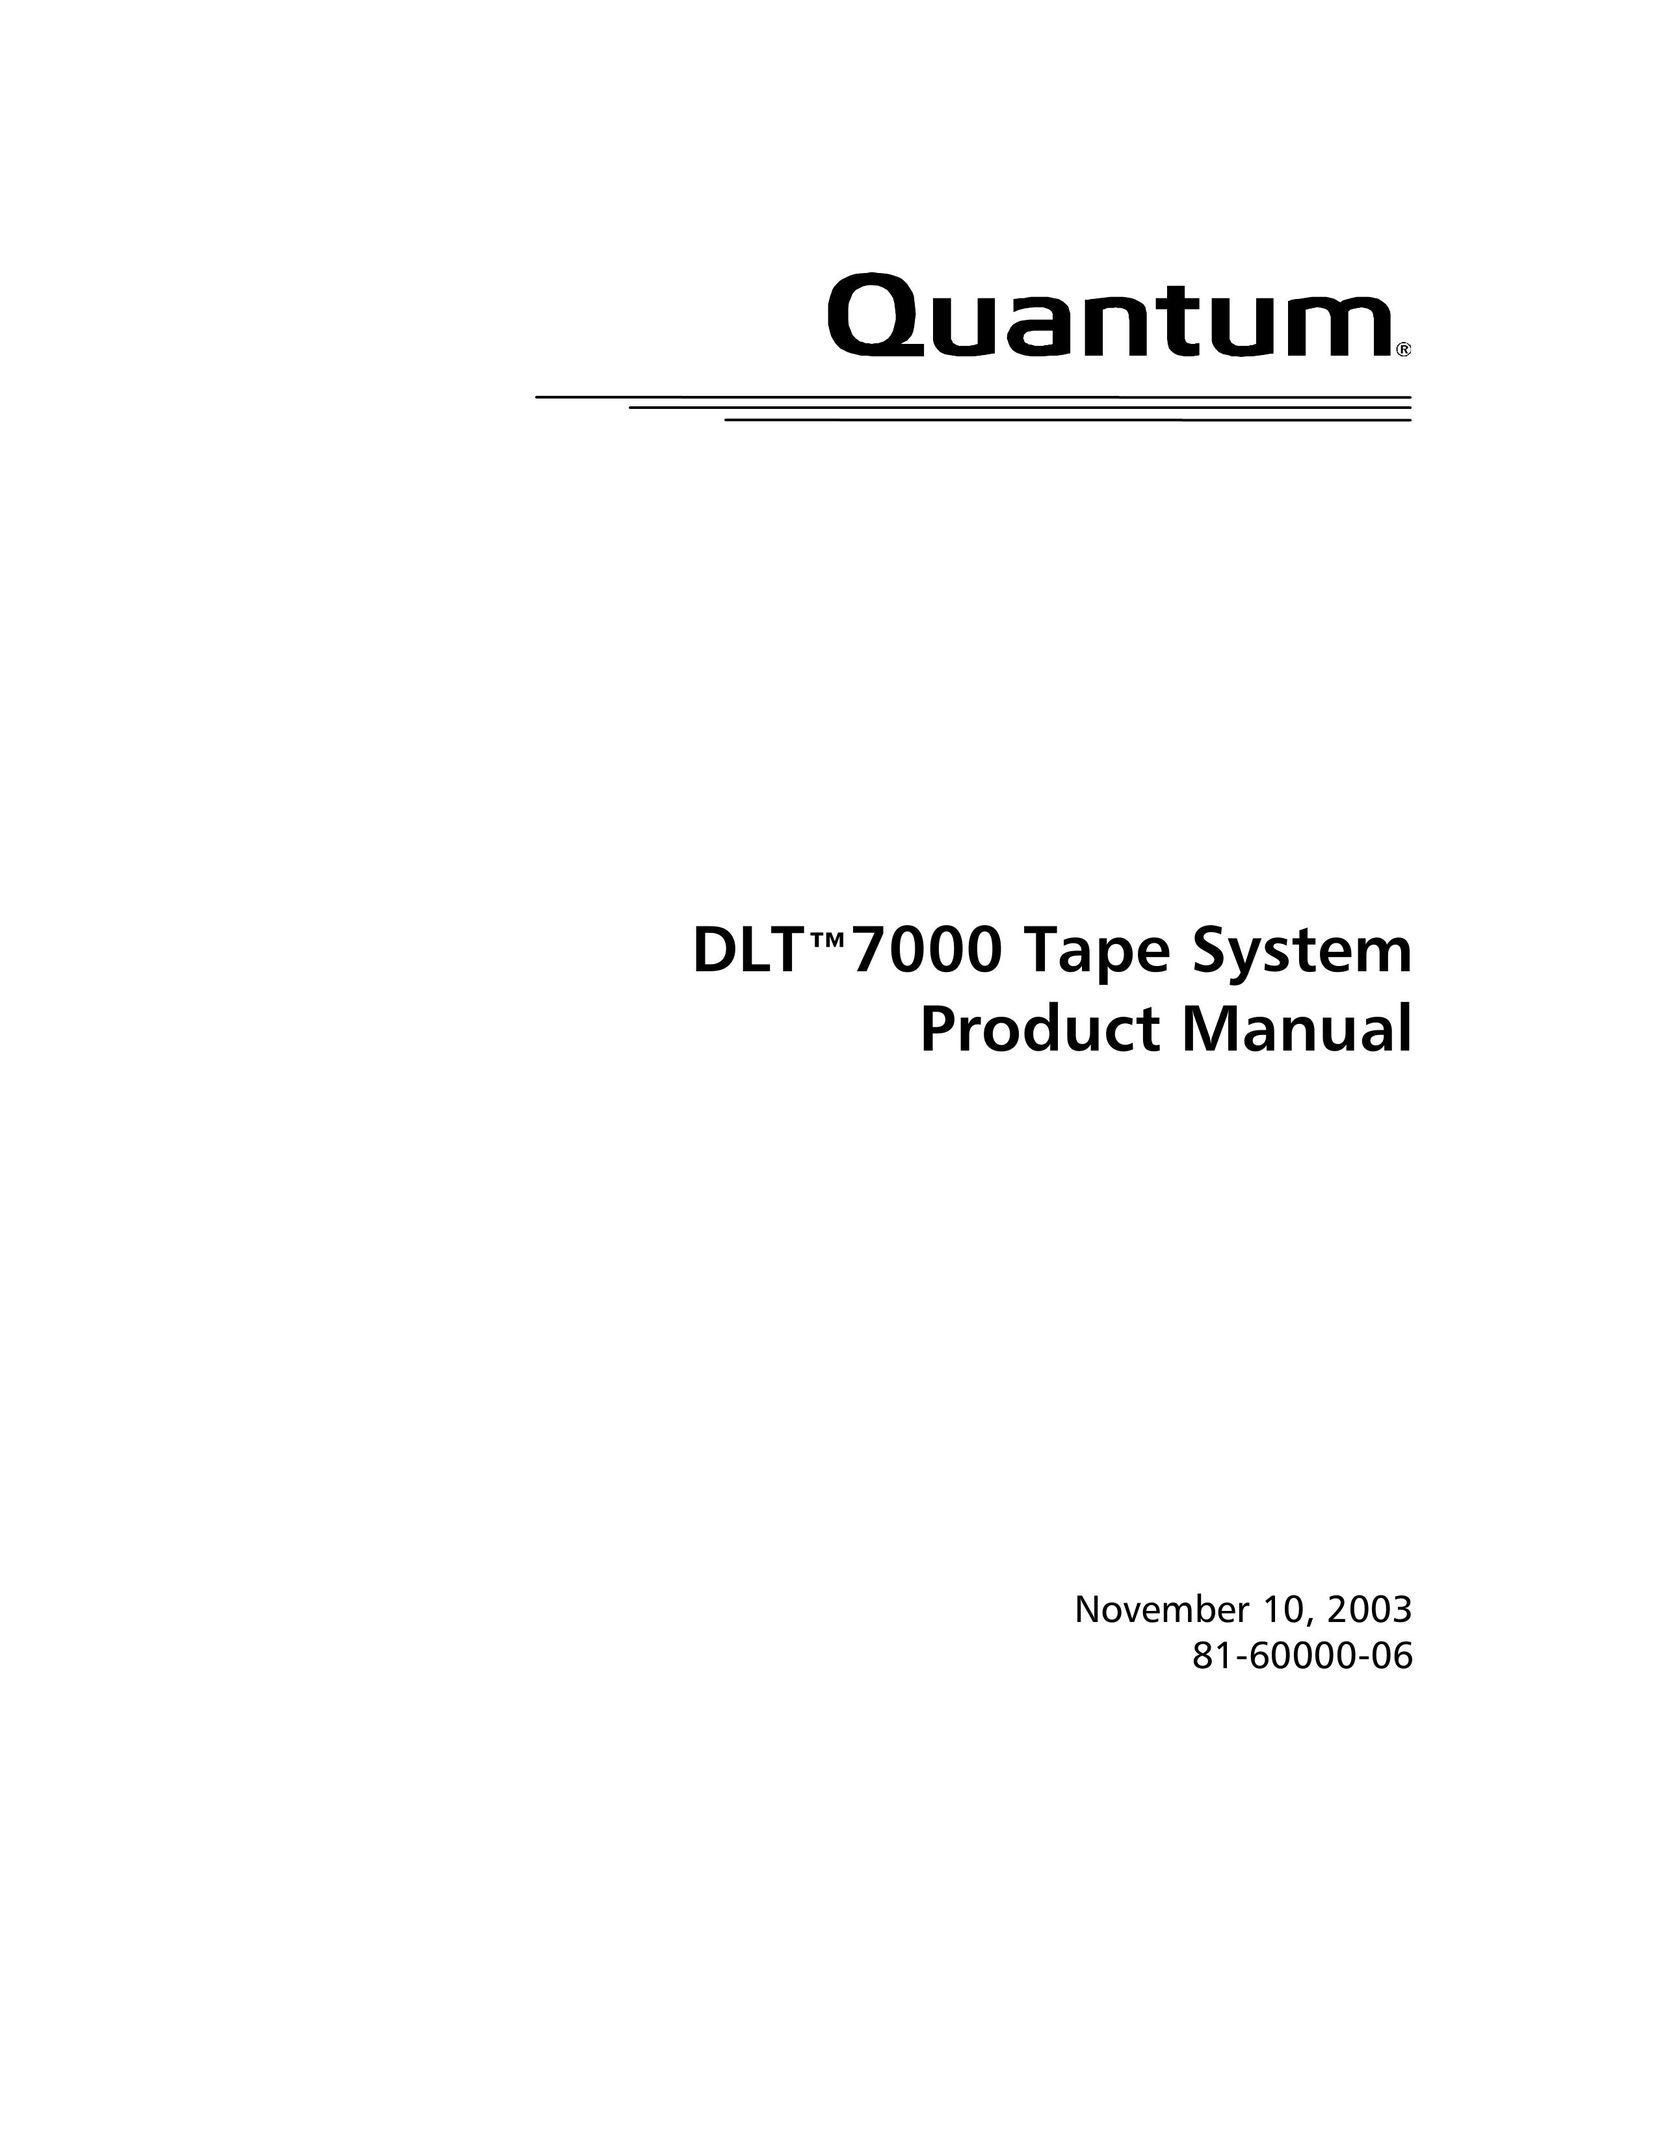 Quantum Instruments DLT 7000 Cassette Player User Manual